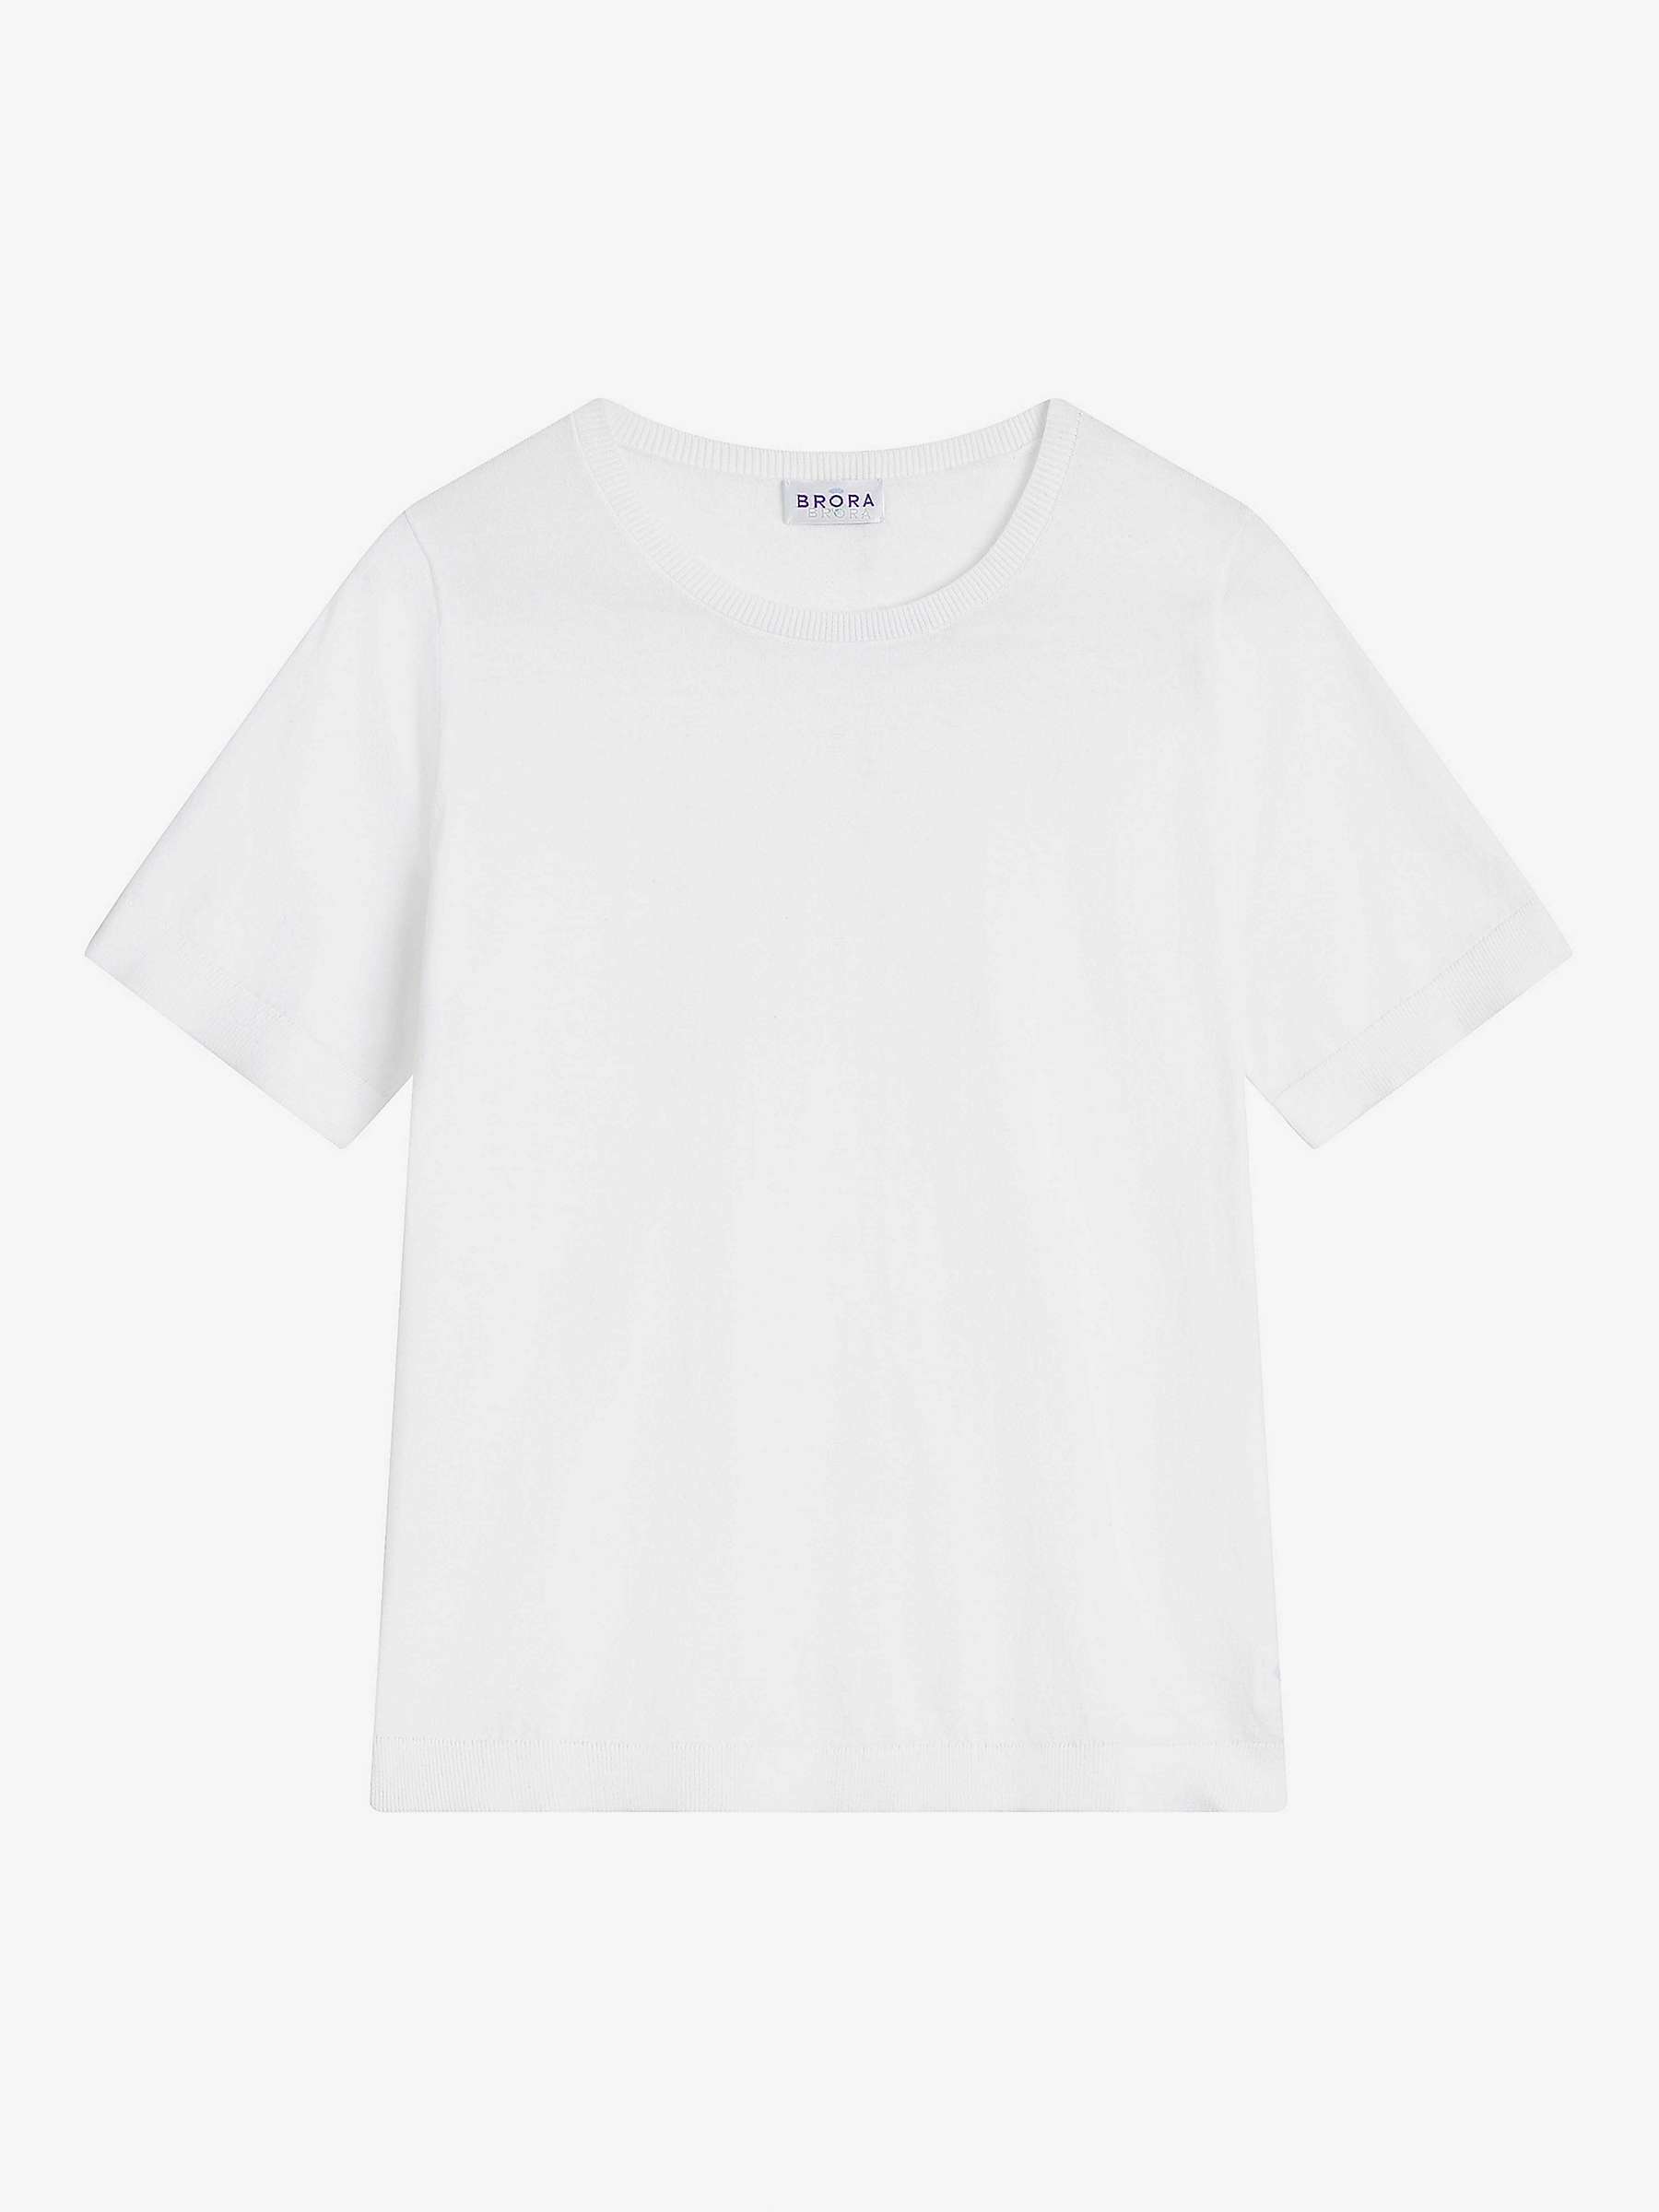 Brora Cotton Knit Classic Crew T-Shirt, White at John Lewis & Partners